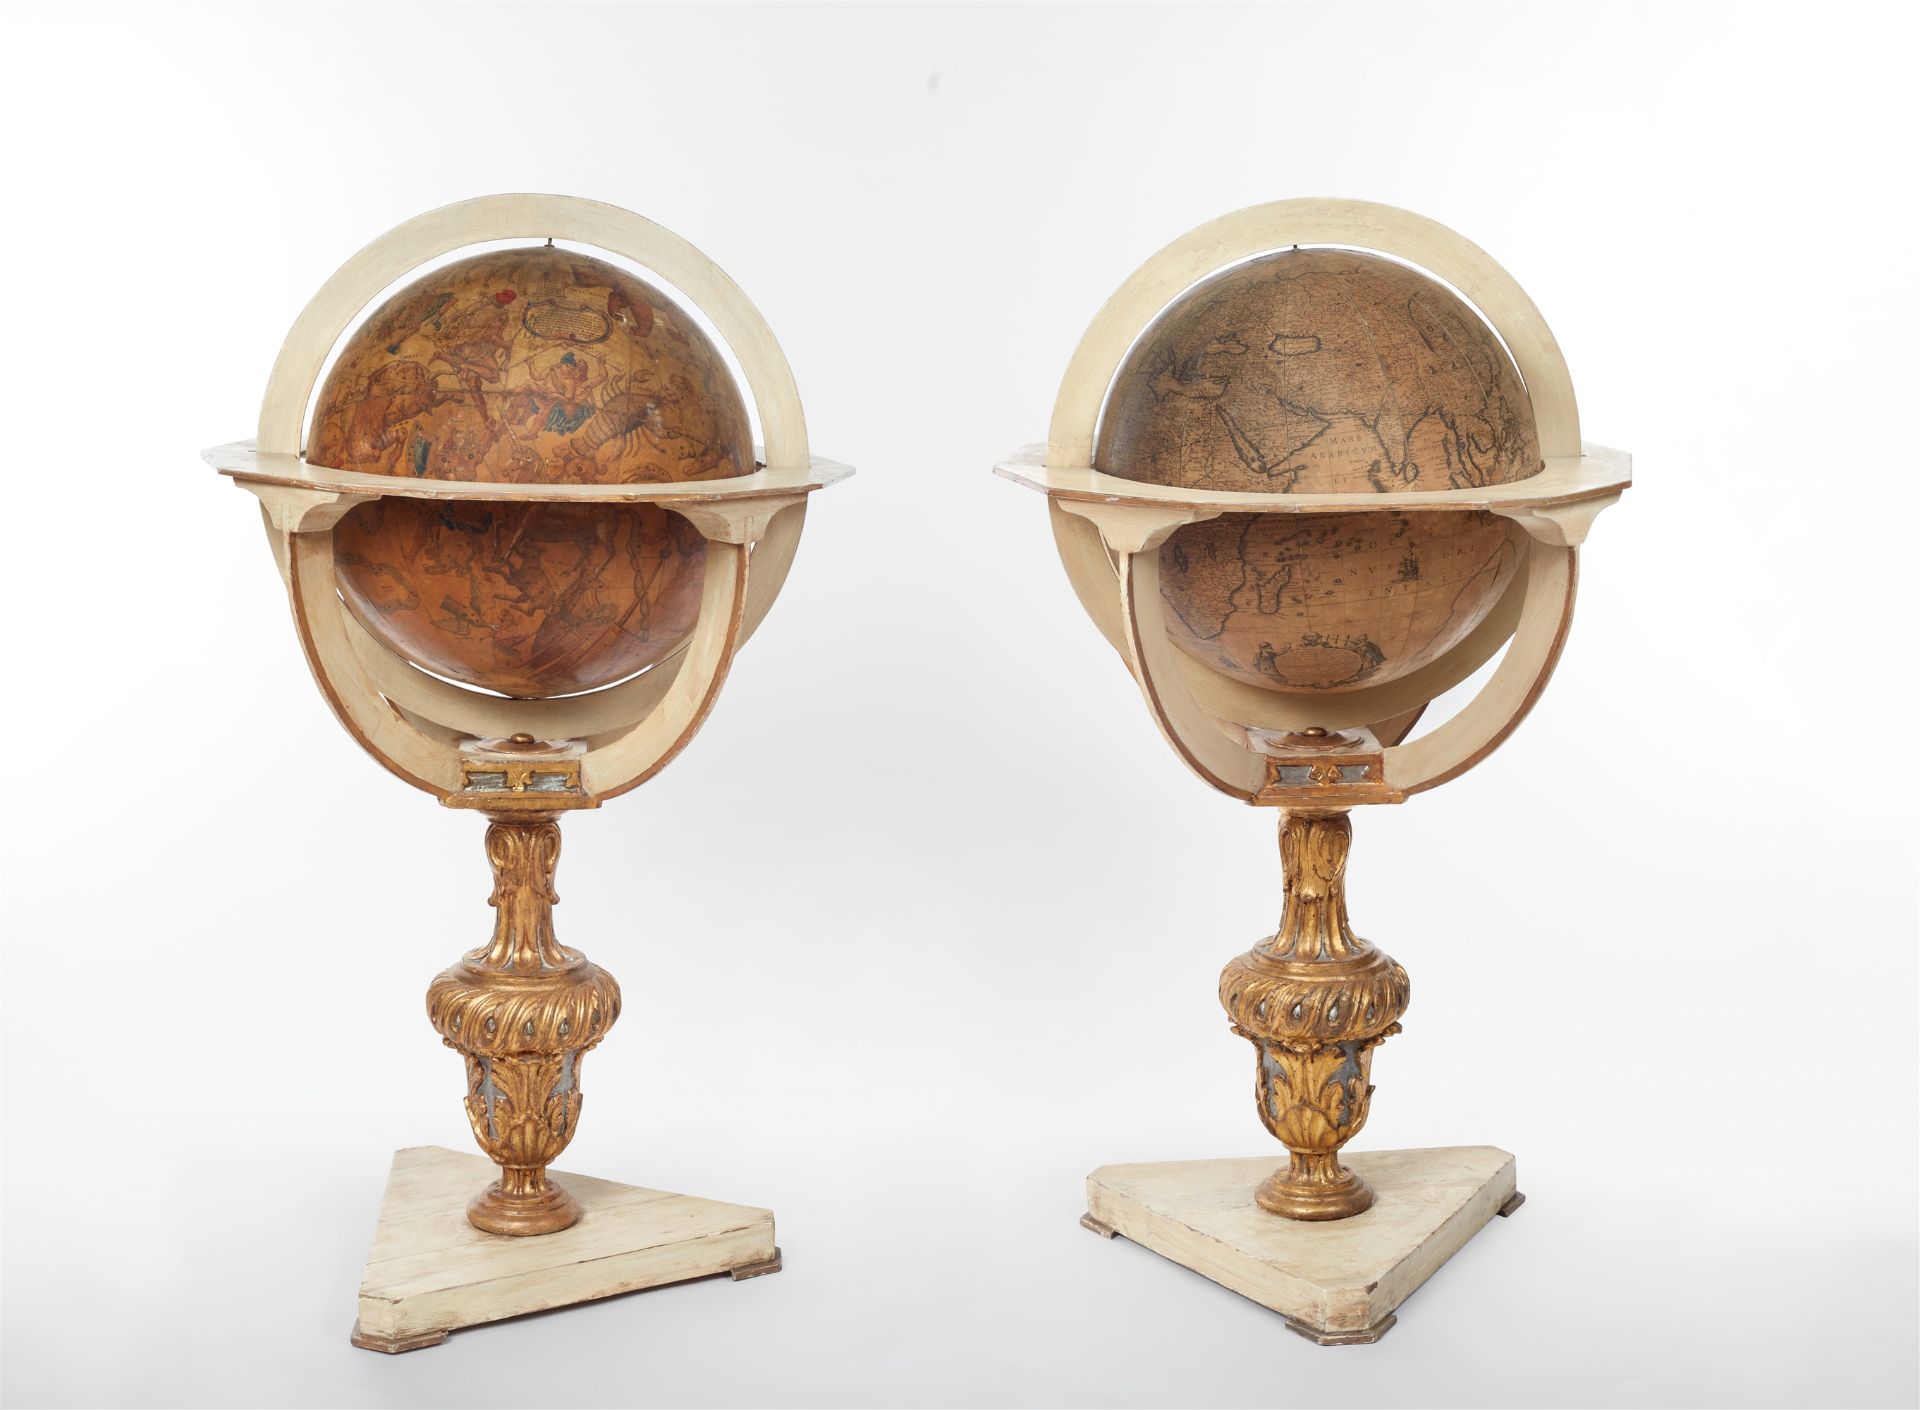 Celestial and terrestrial globes by Matthaeus Greuter